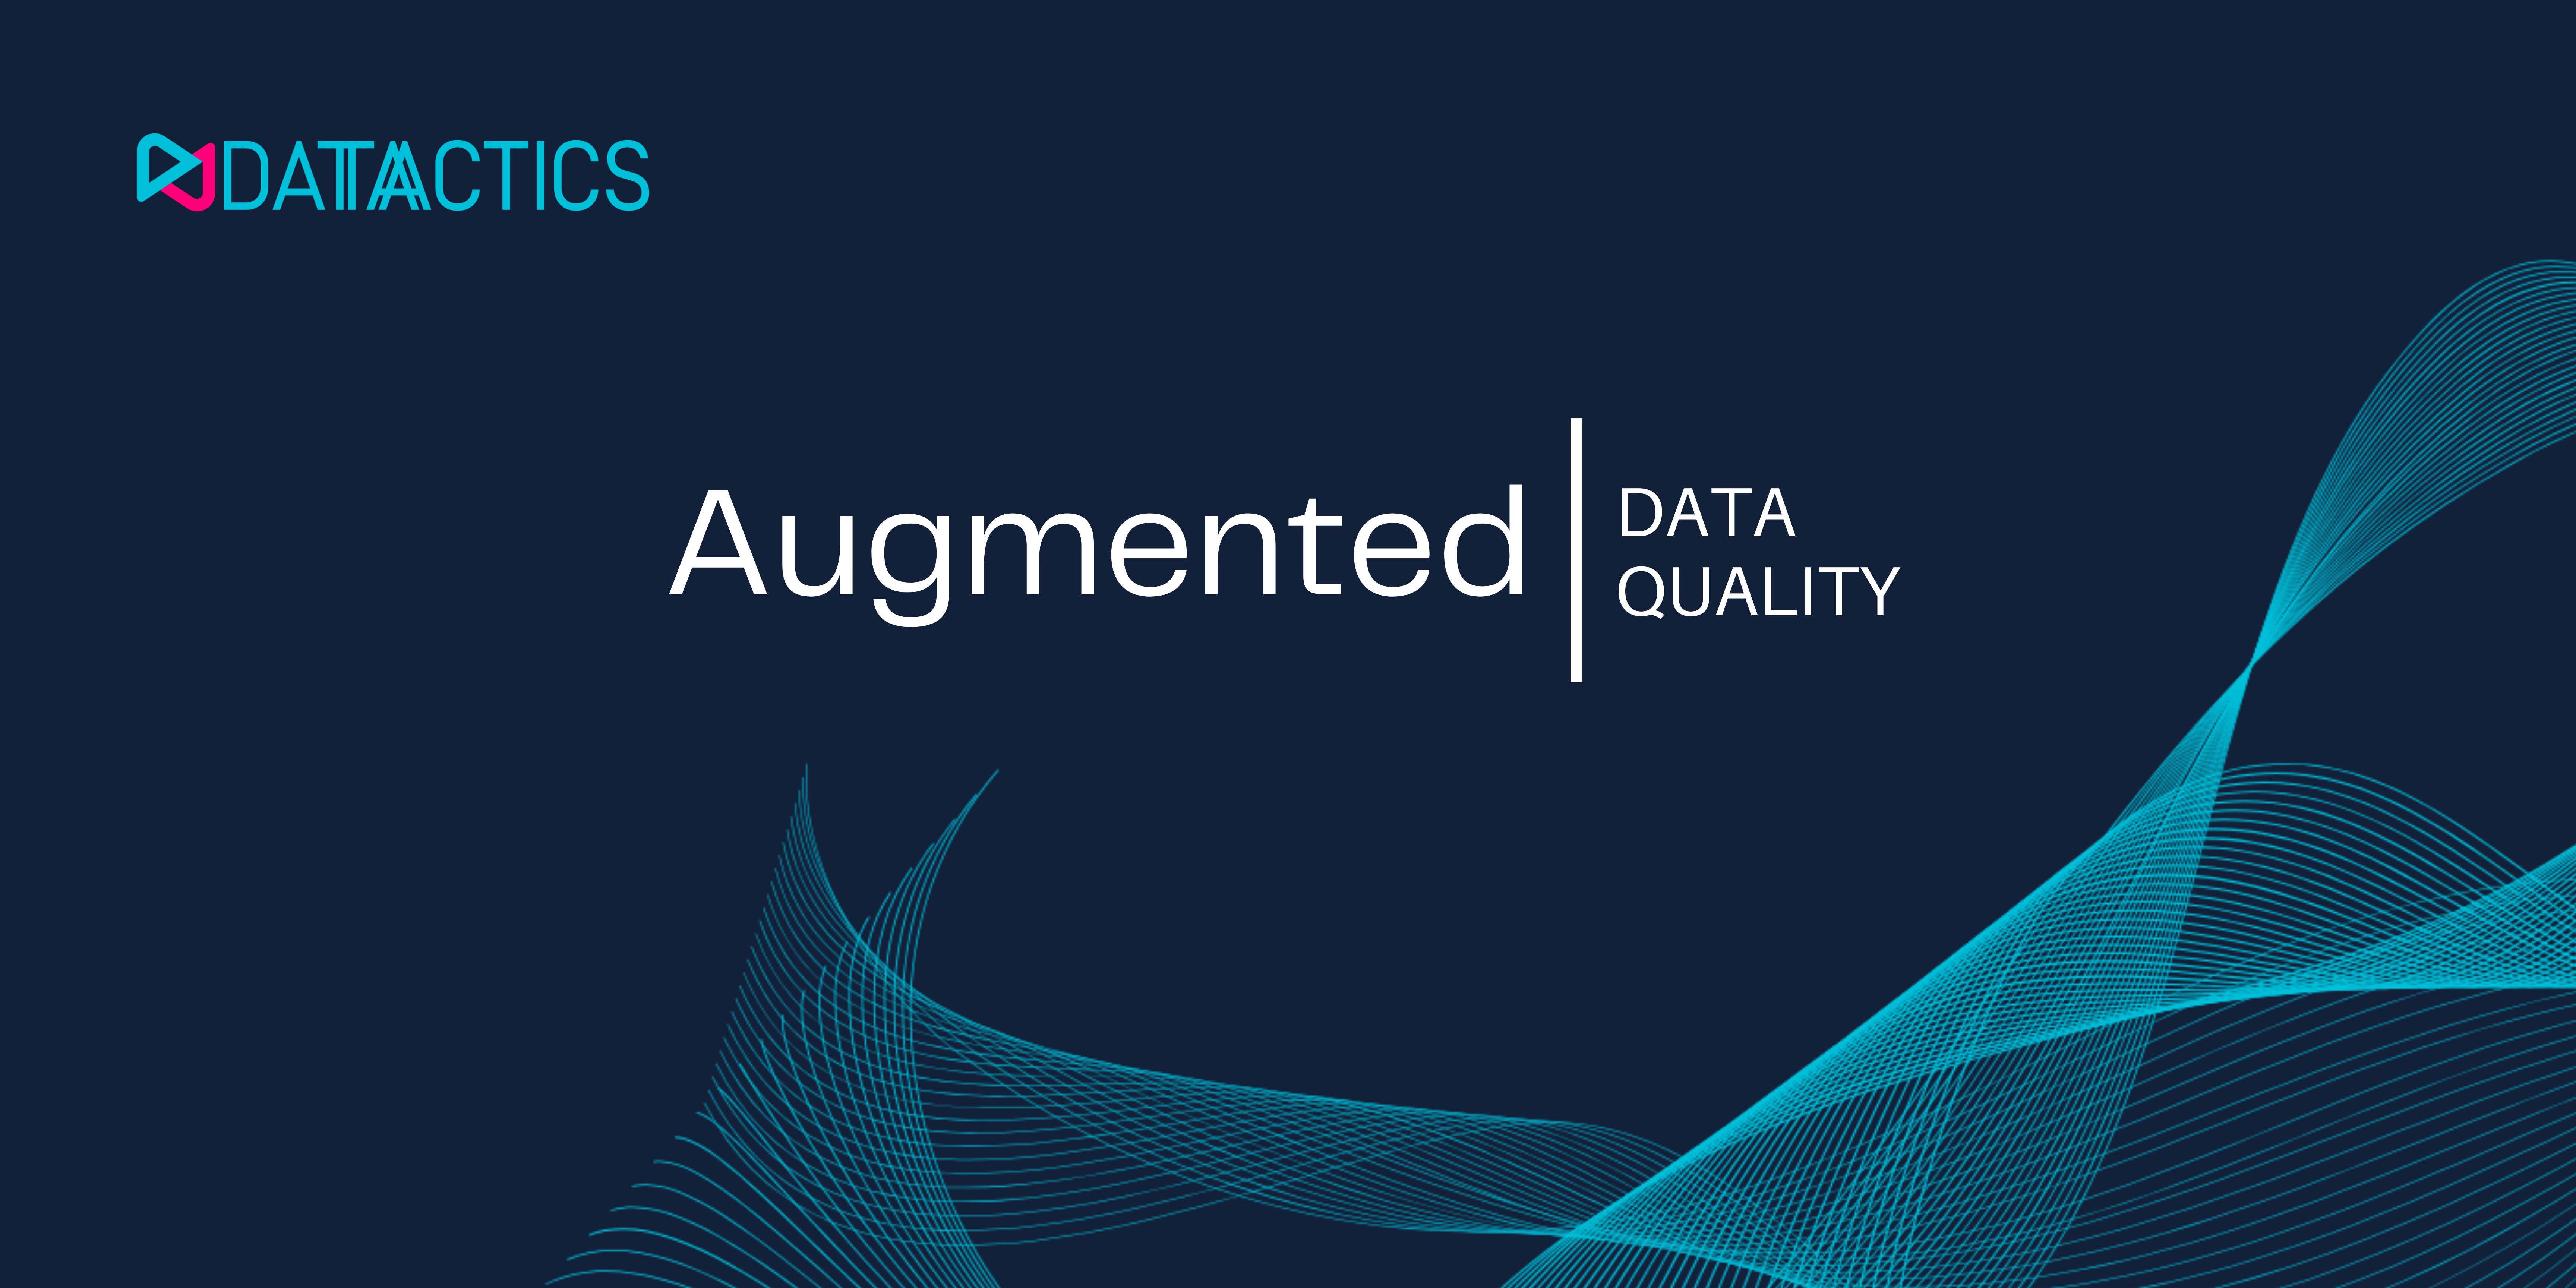 Datactics Augmented Data Quality